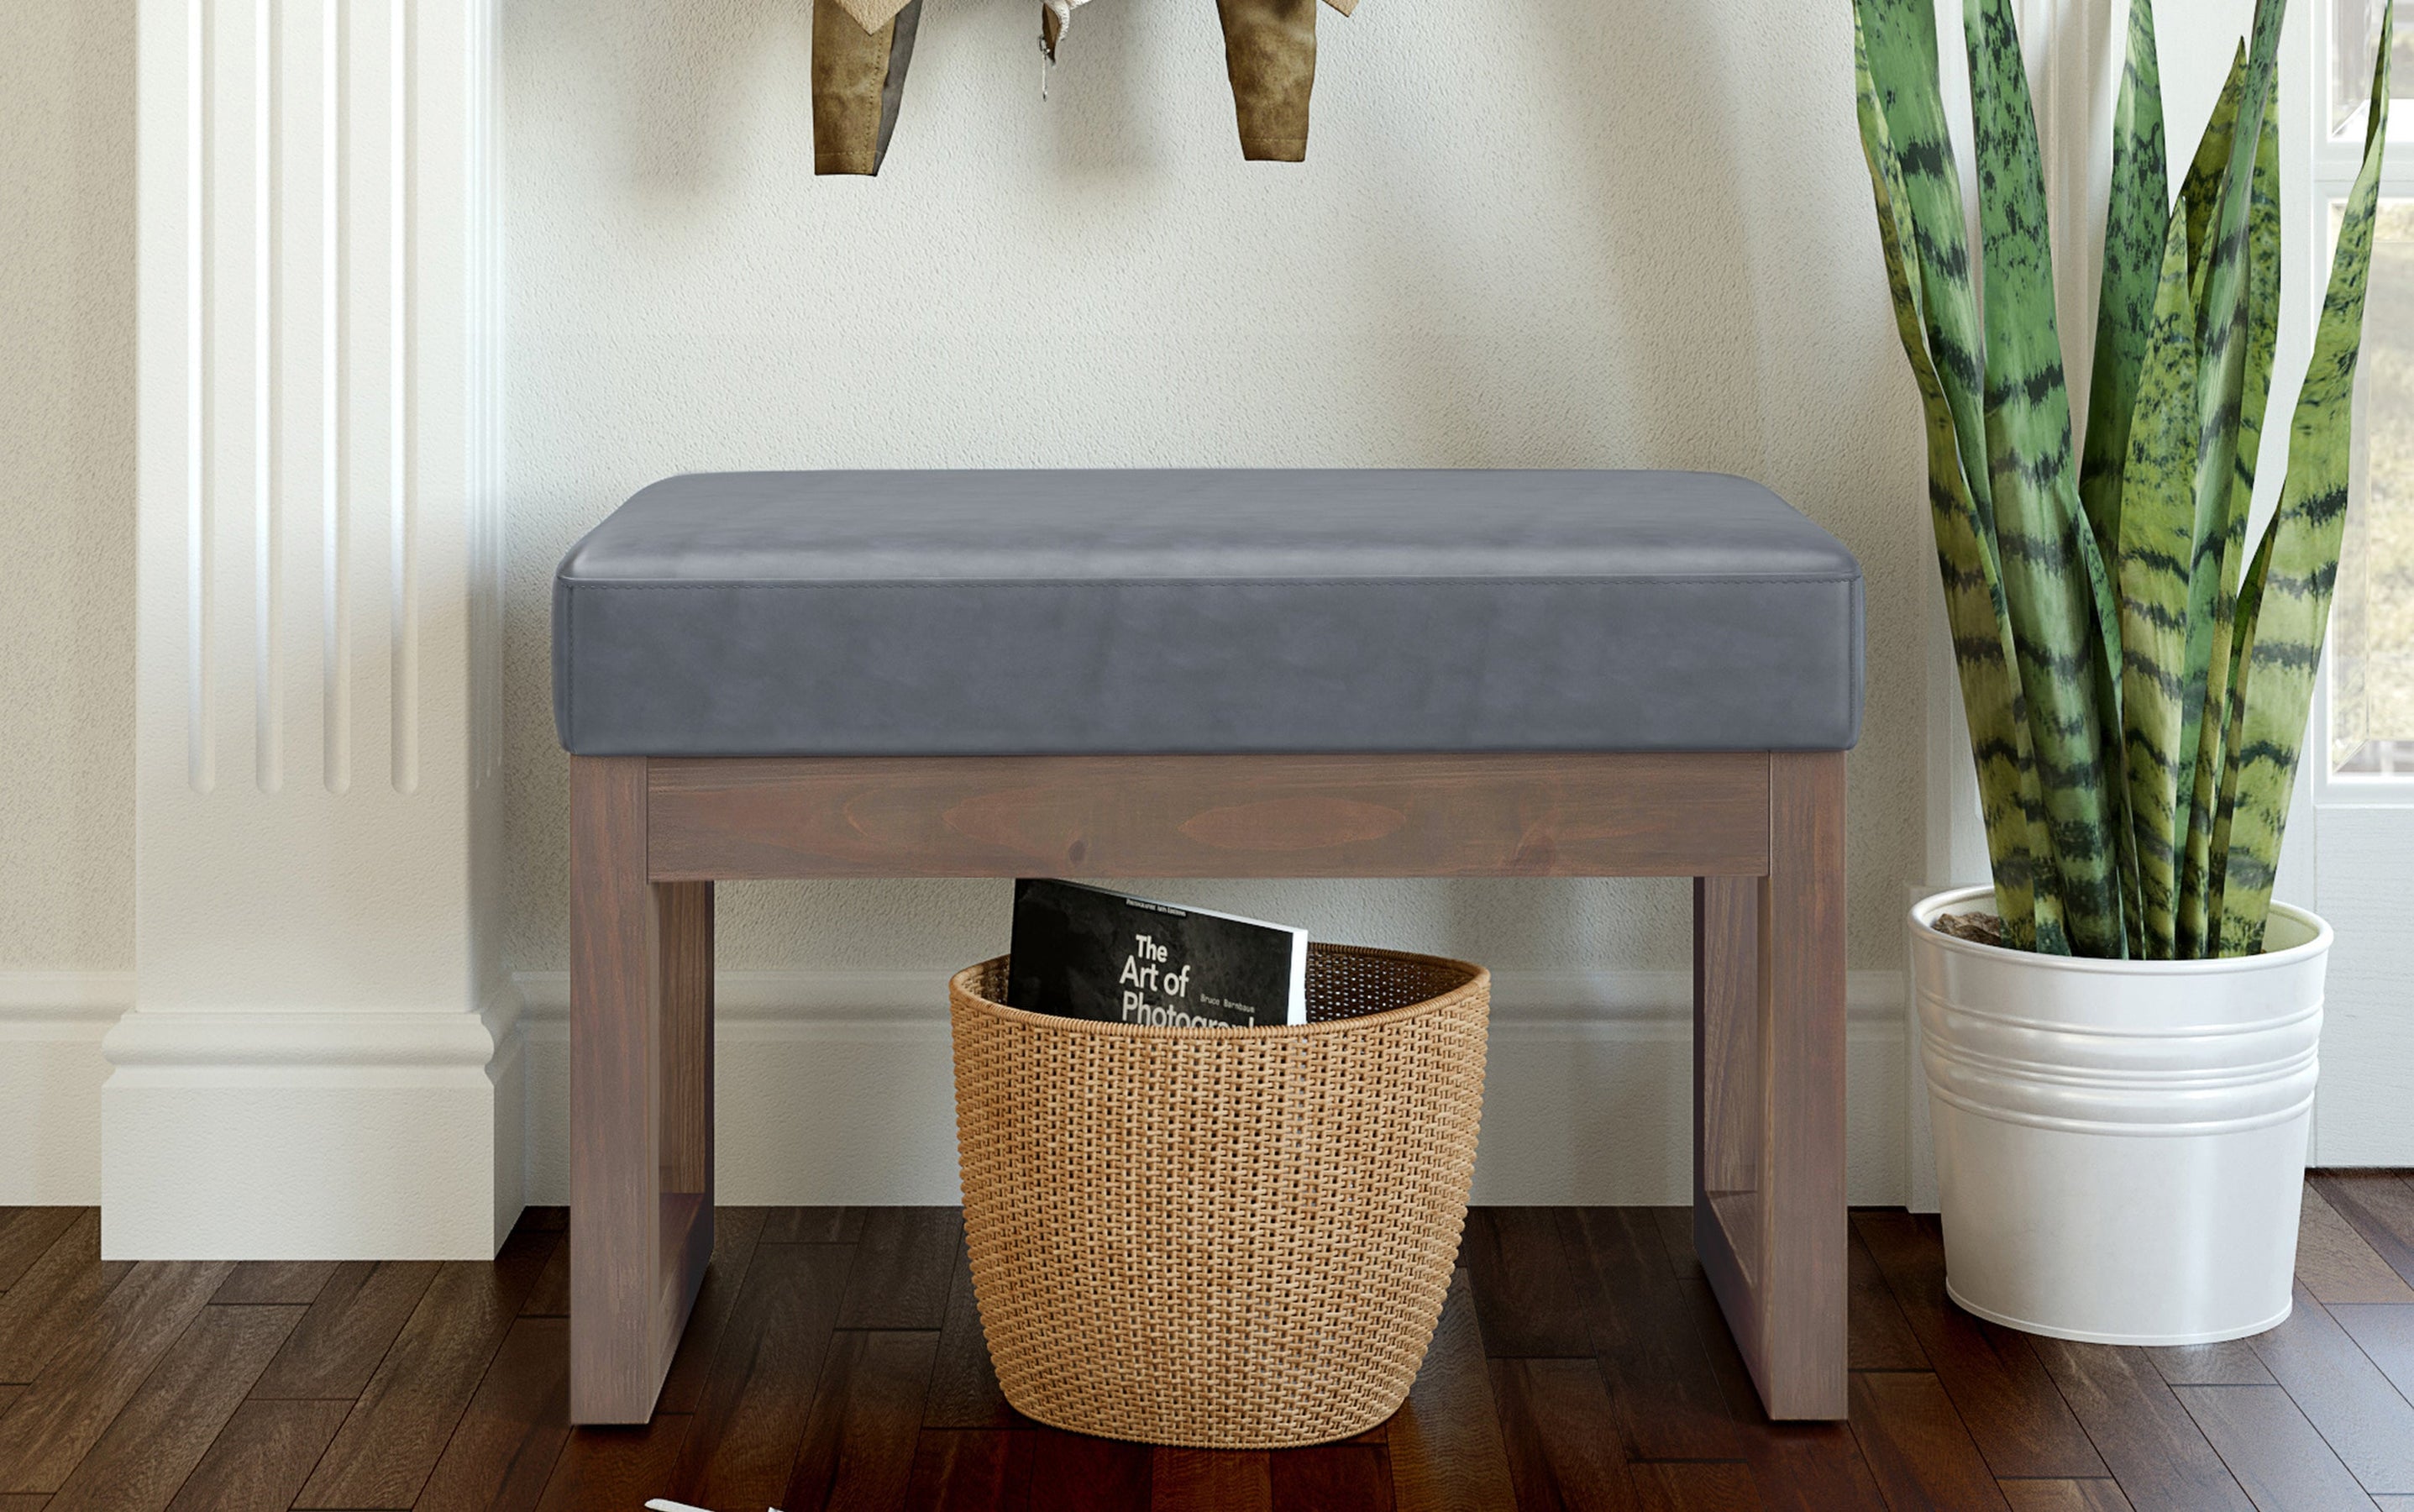 Stone Grey Vegan Leather | Milltown Footstool Small Ottoman Bench